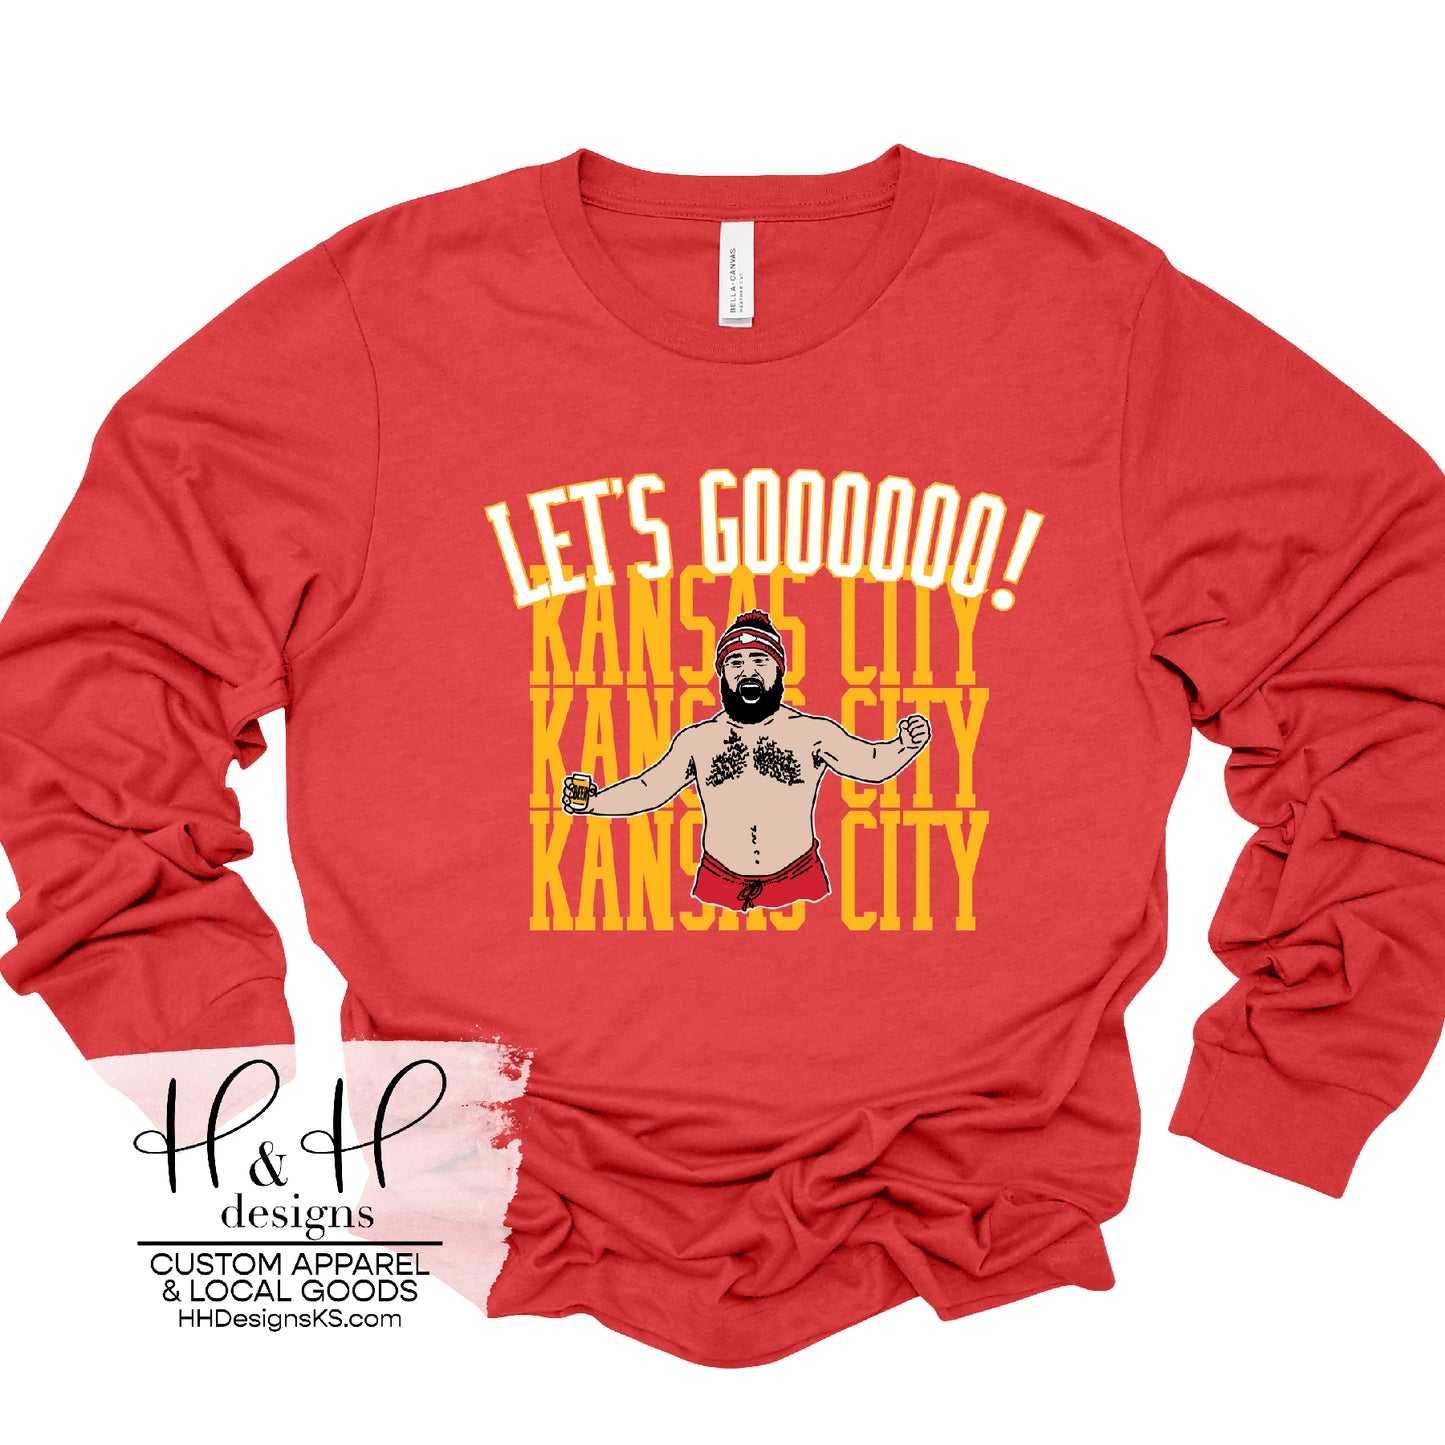 Let's Go Kansas City - Shirtless Jason